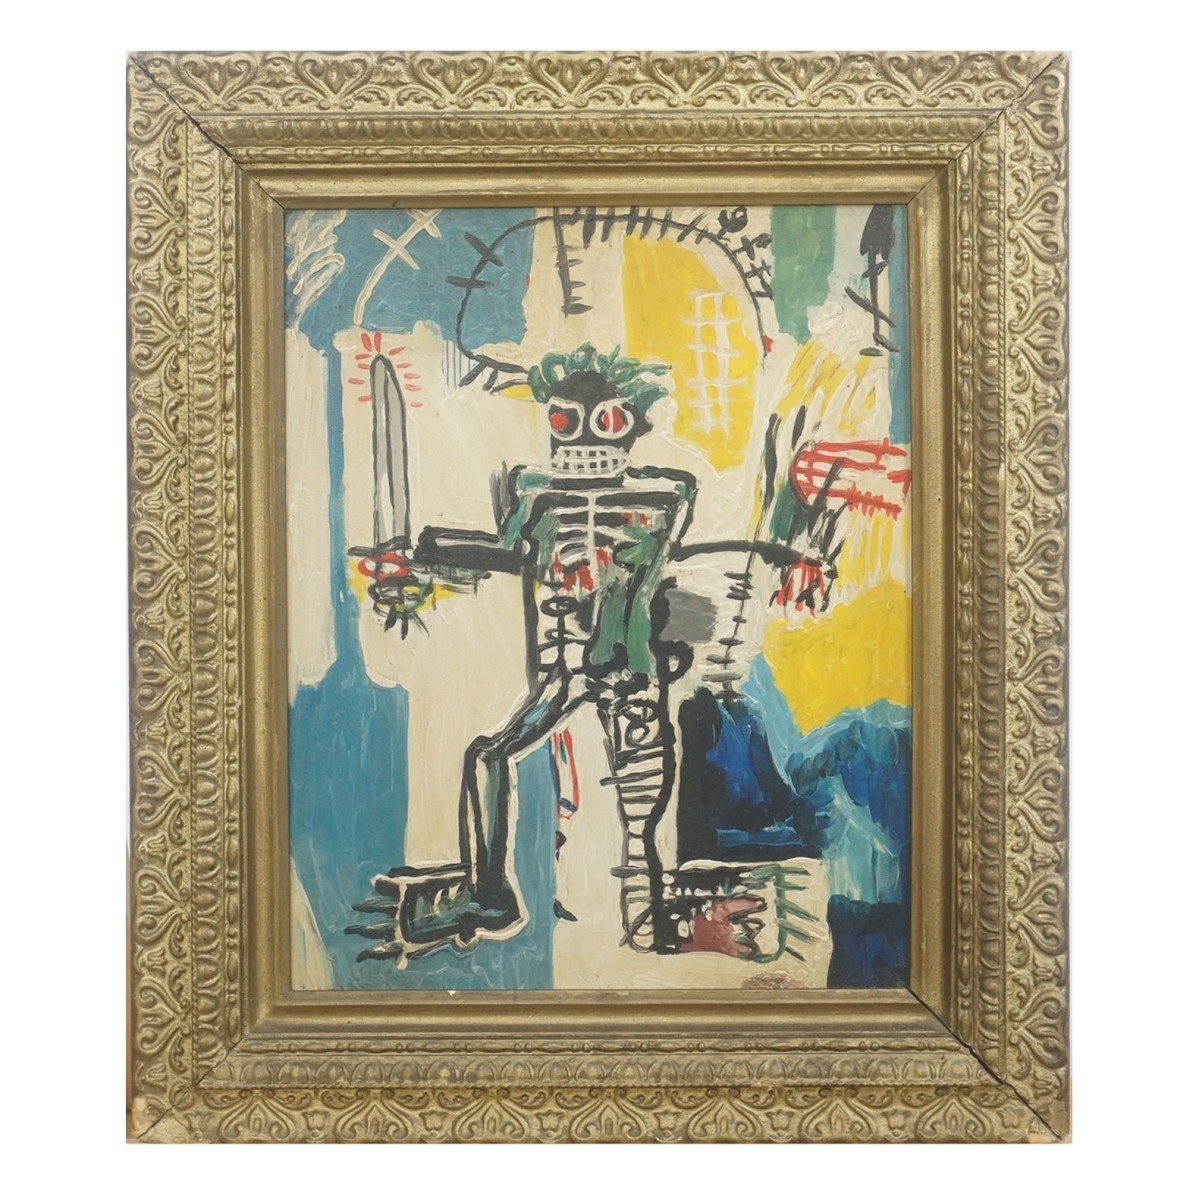 After: Jean-Michel Basquiat (1960 - 1988)